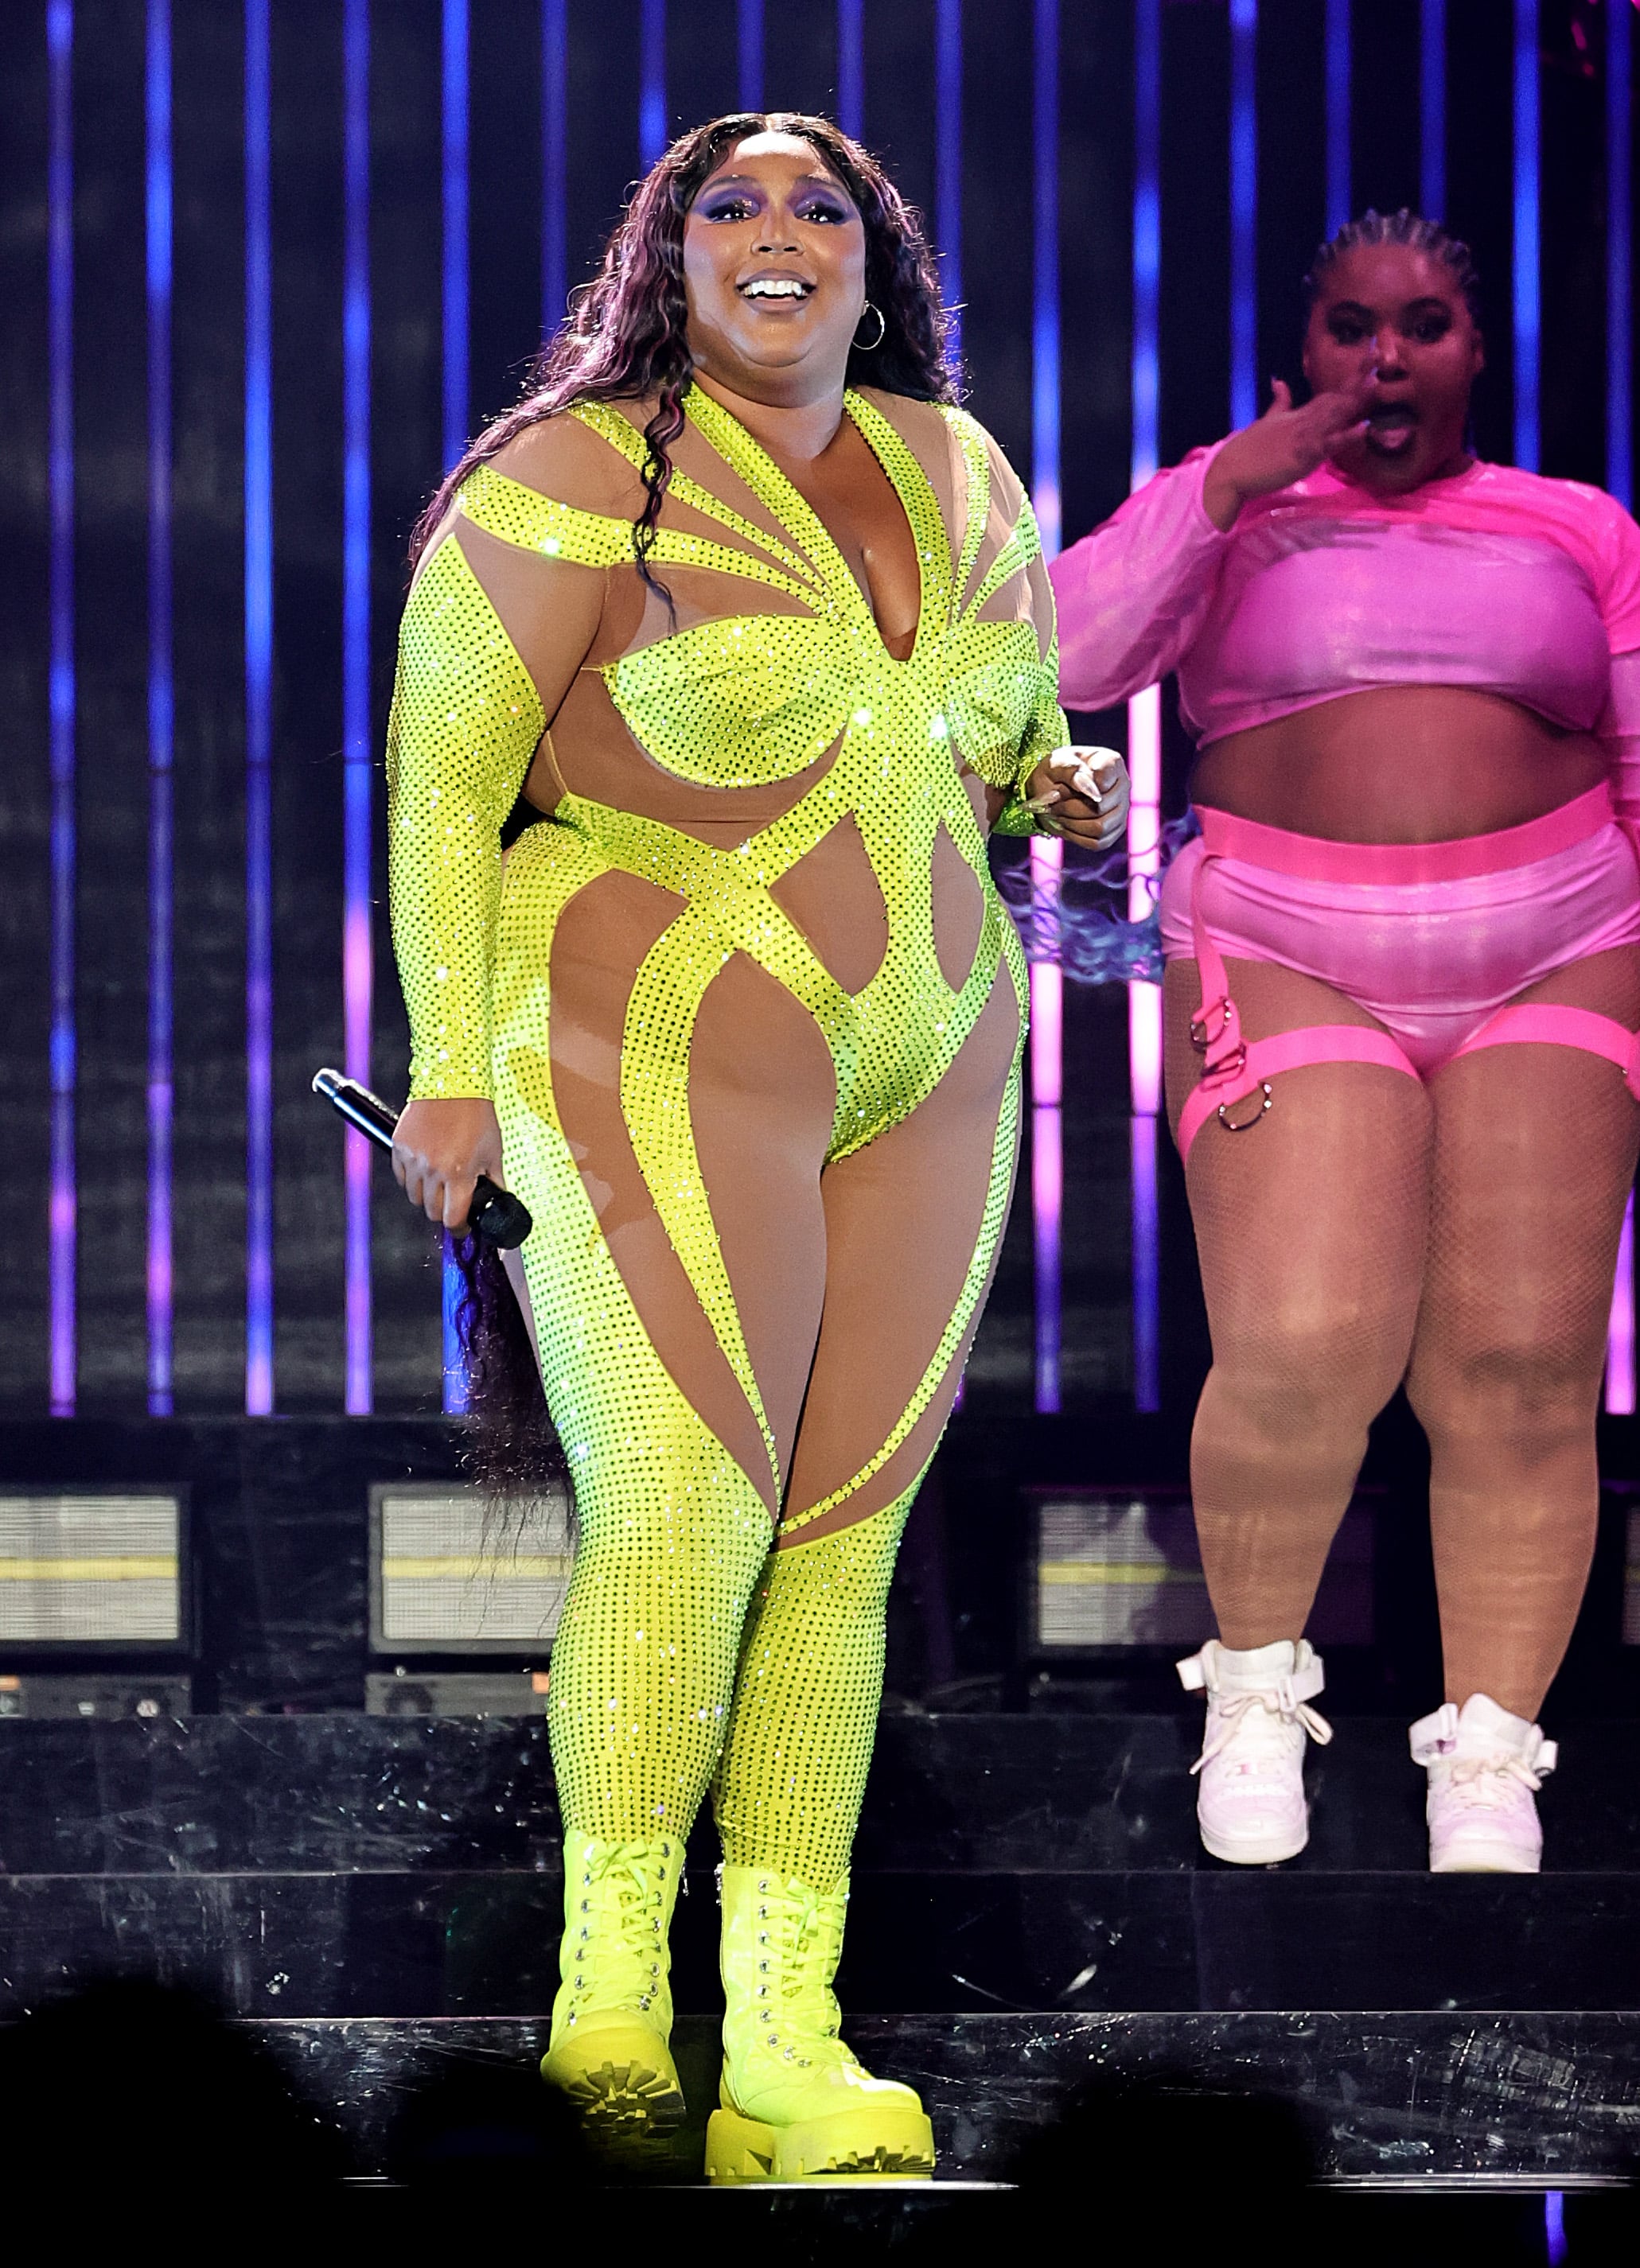 Lizzo Rocks Sparkling Bodysuit for Coachella 2019 Performance